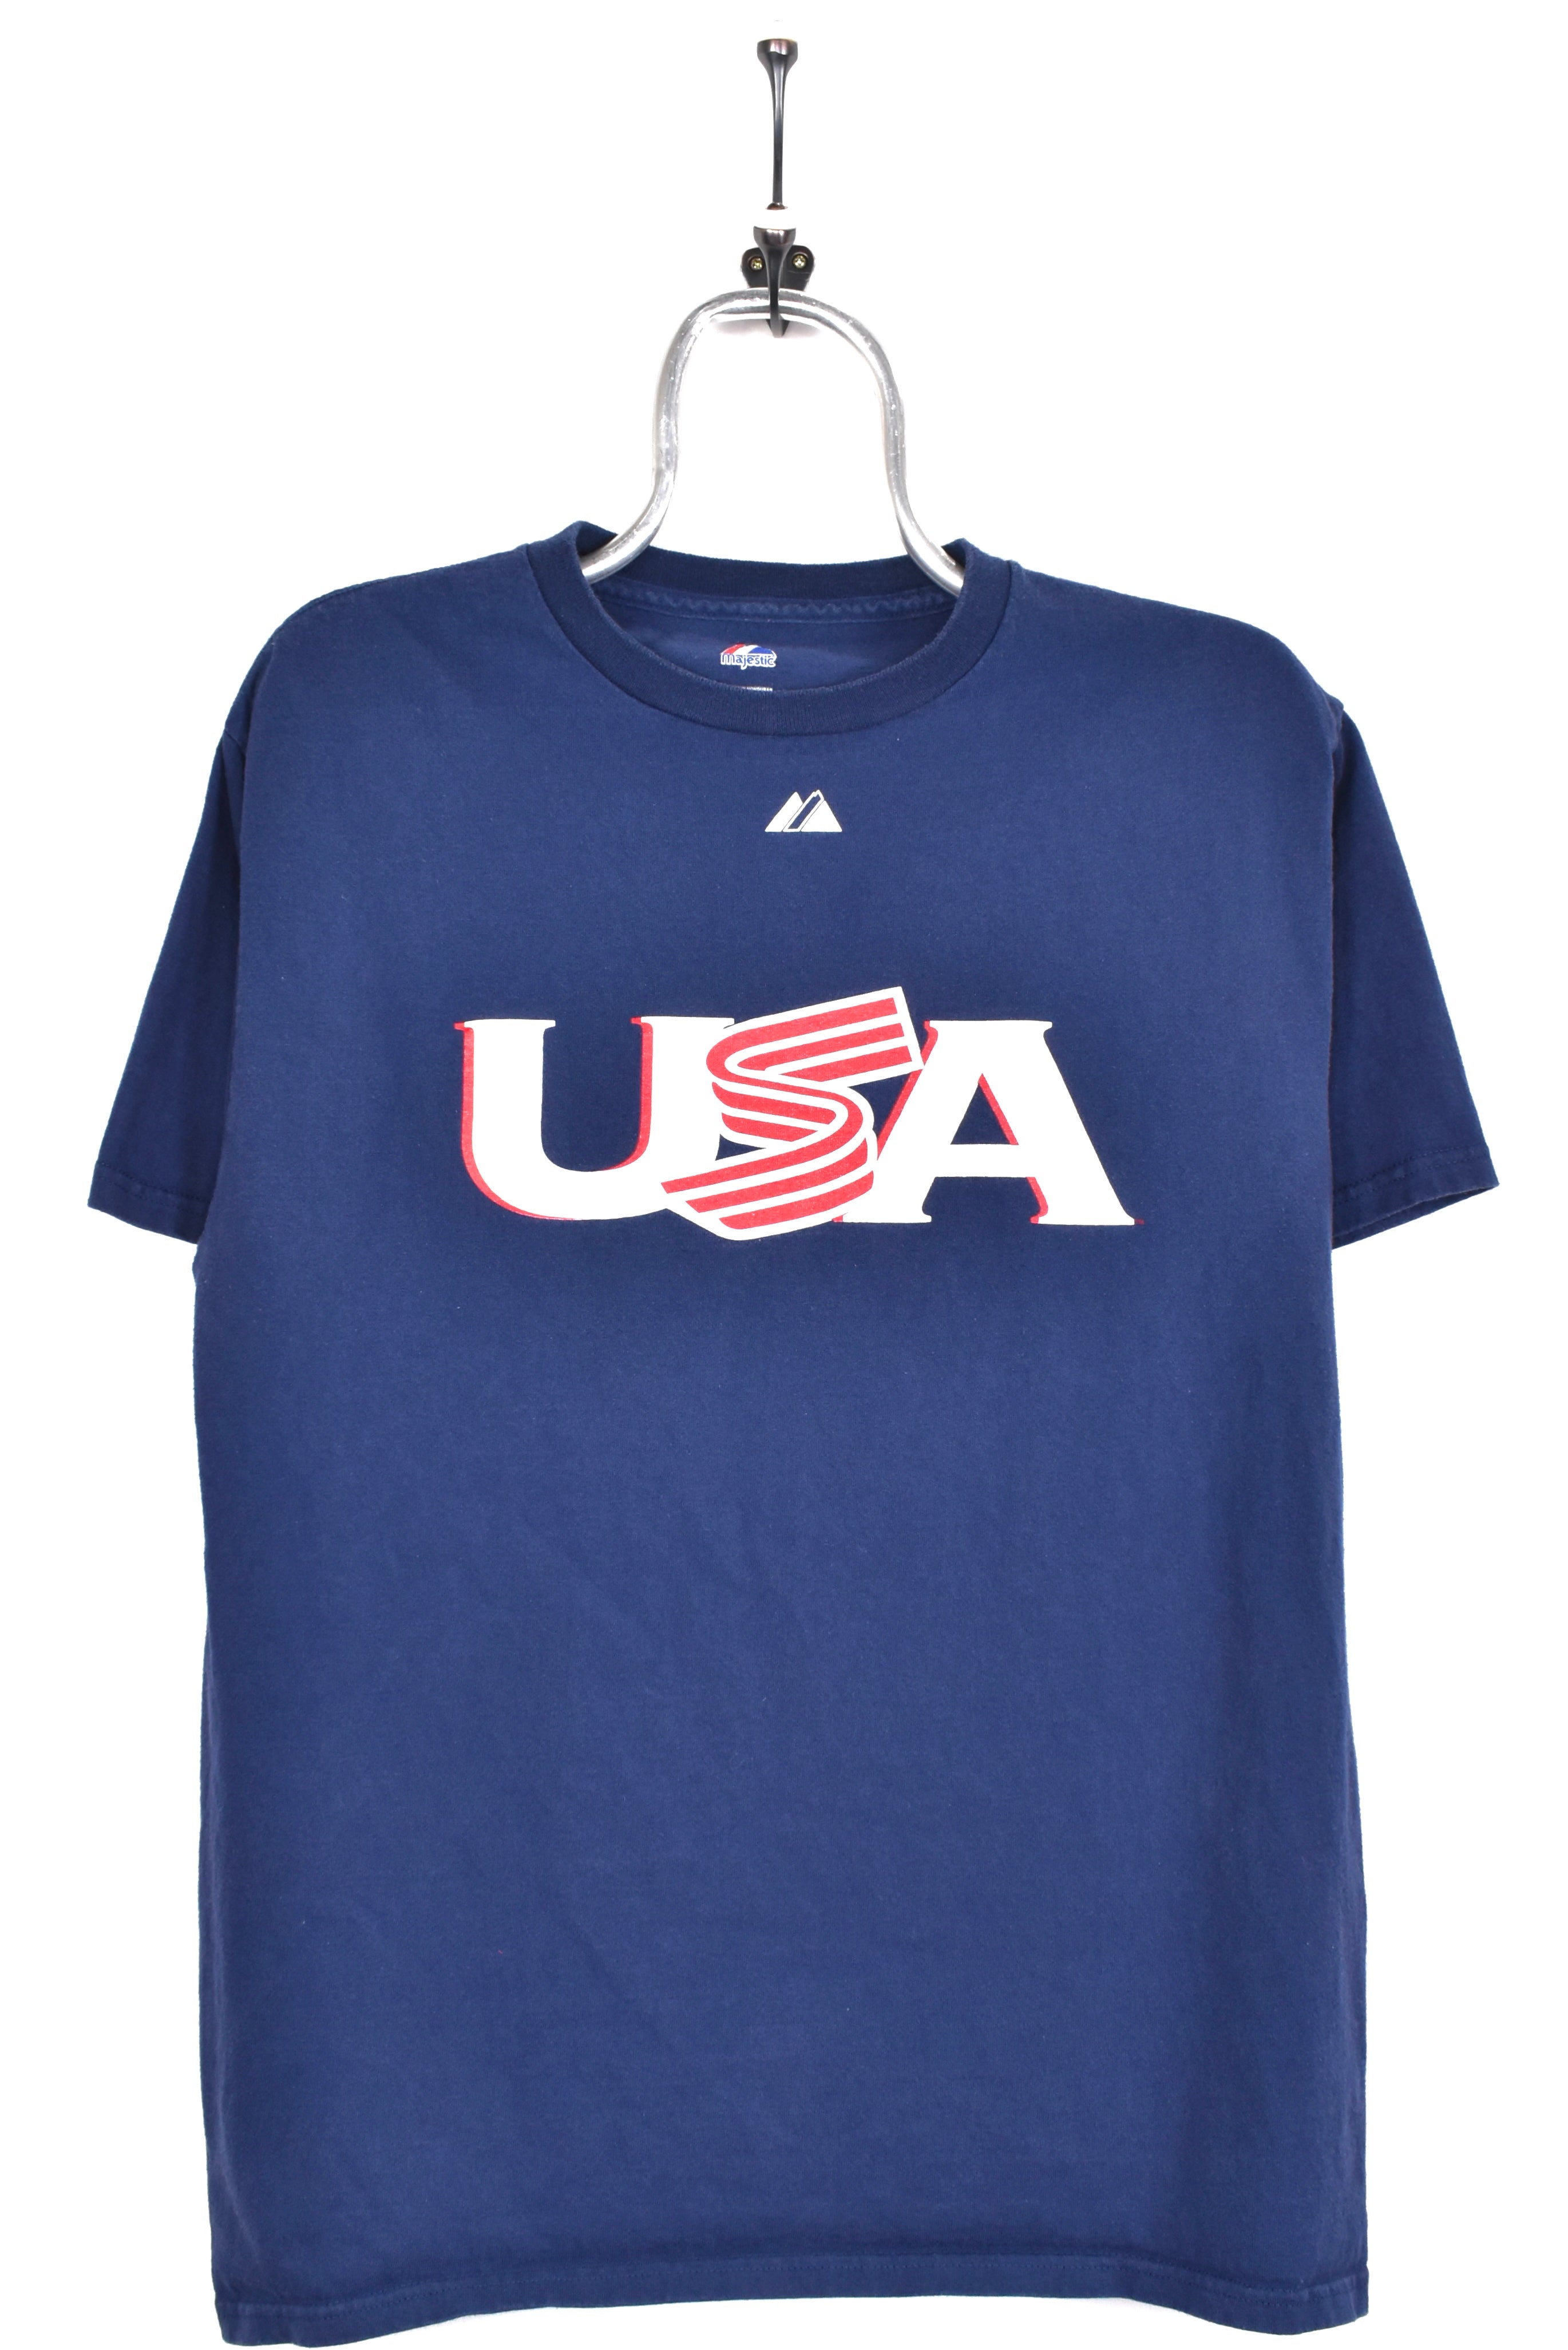 Vintage MLB shirt, USA Jeter navy blue graphic tee - AU Medium PRO SPORT